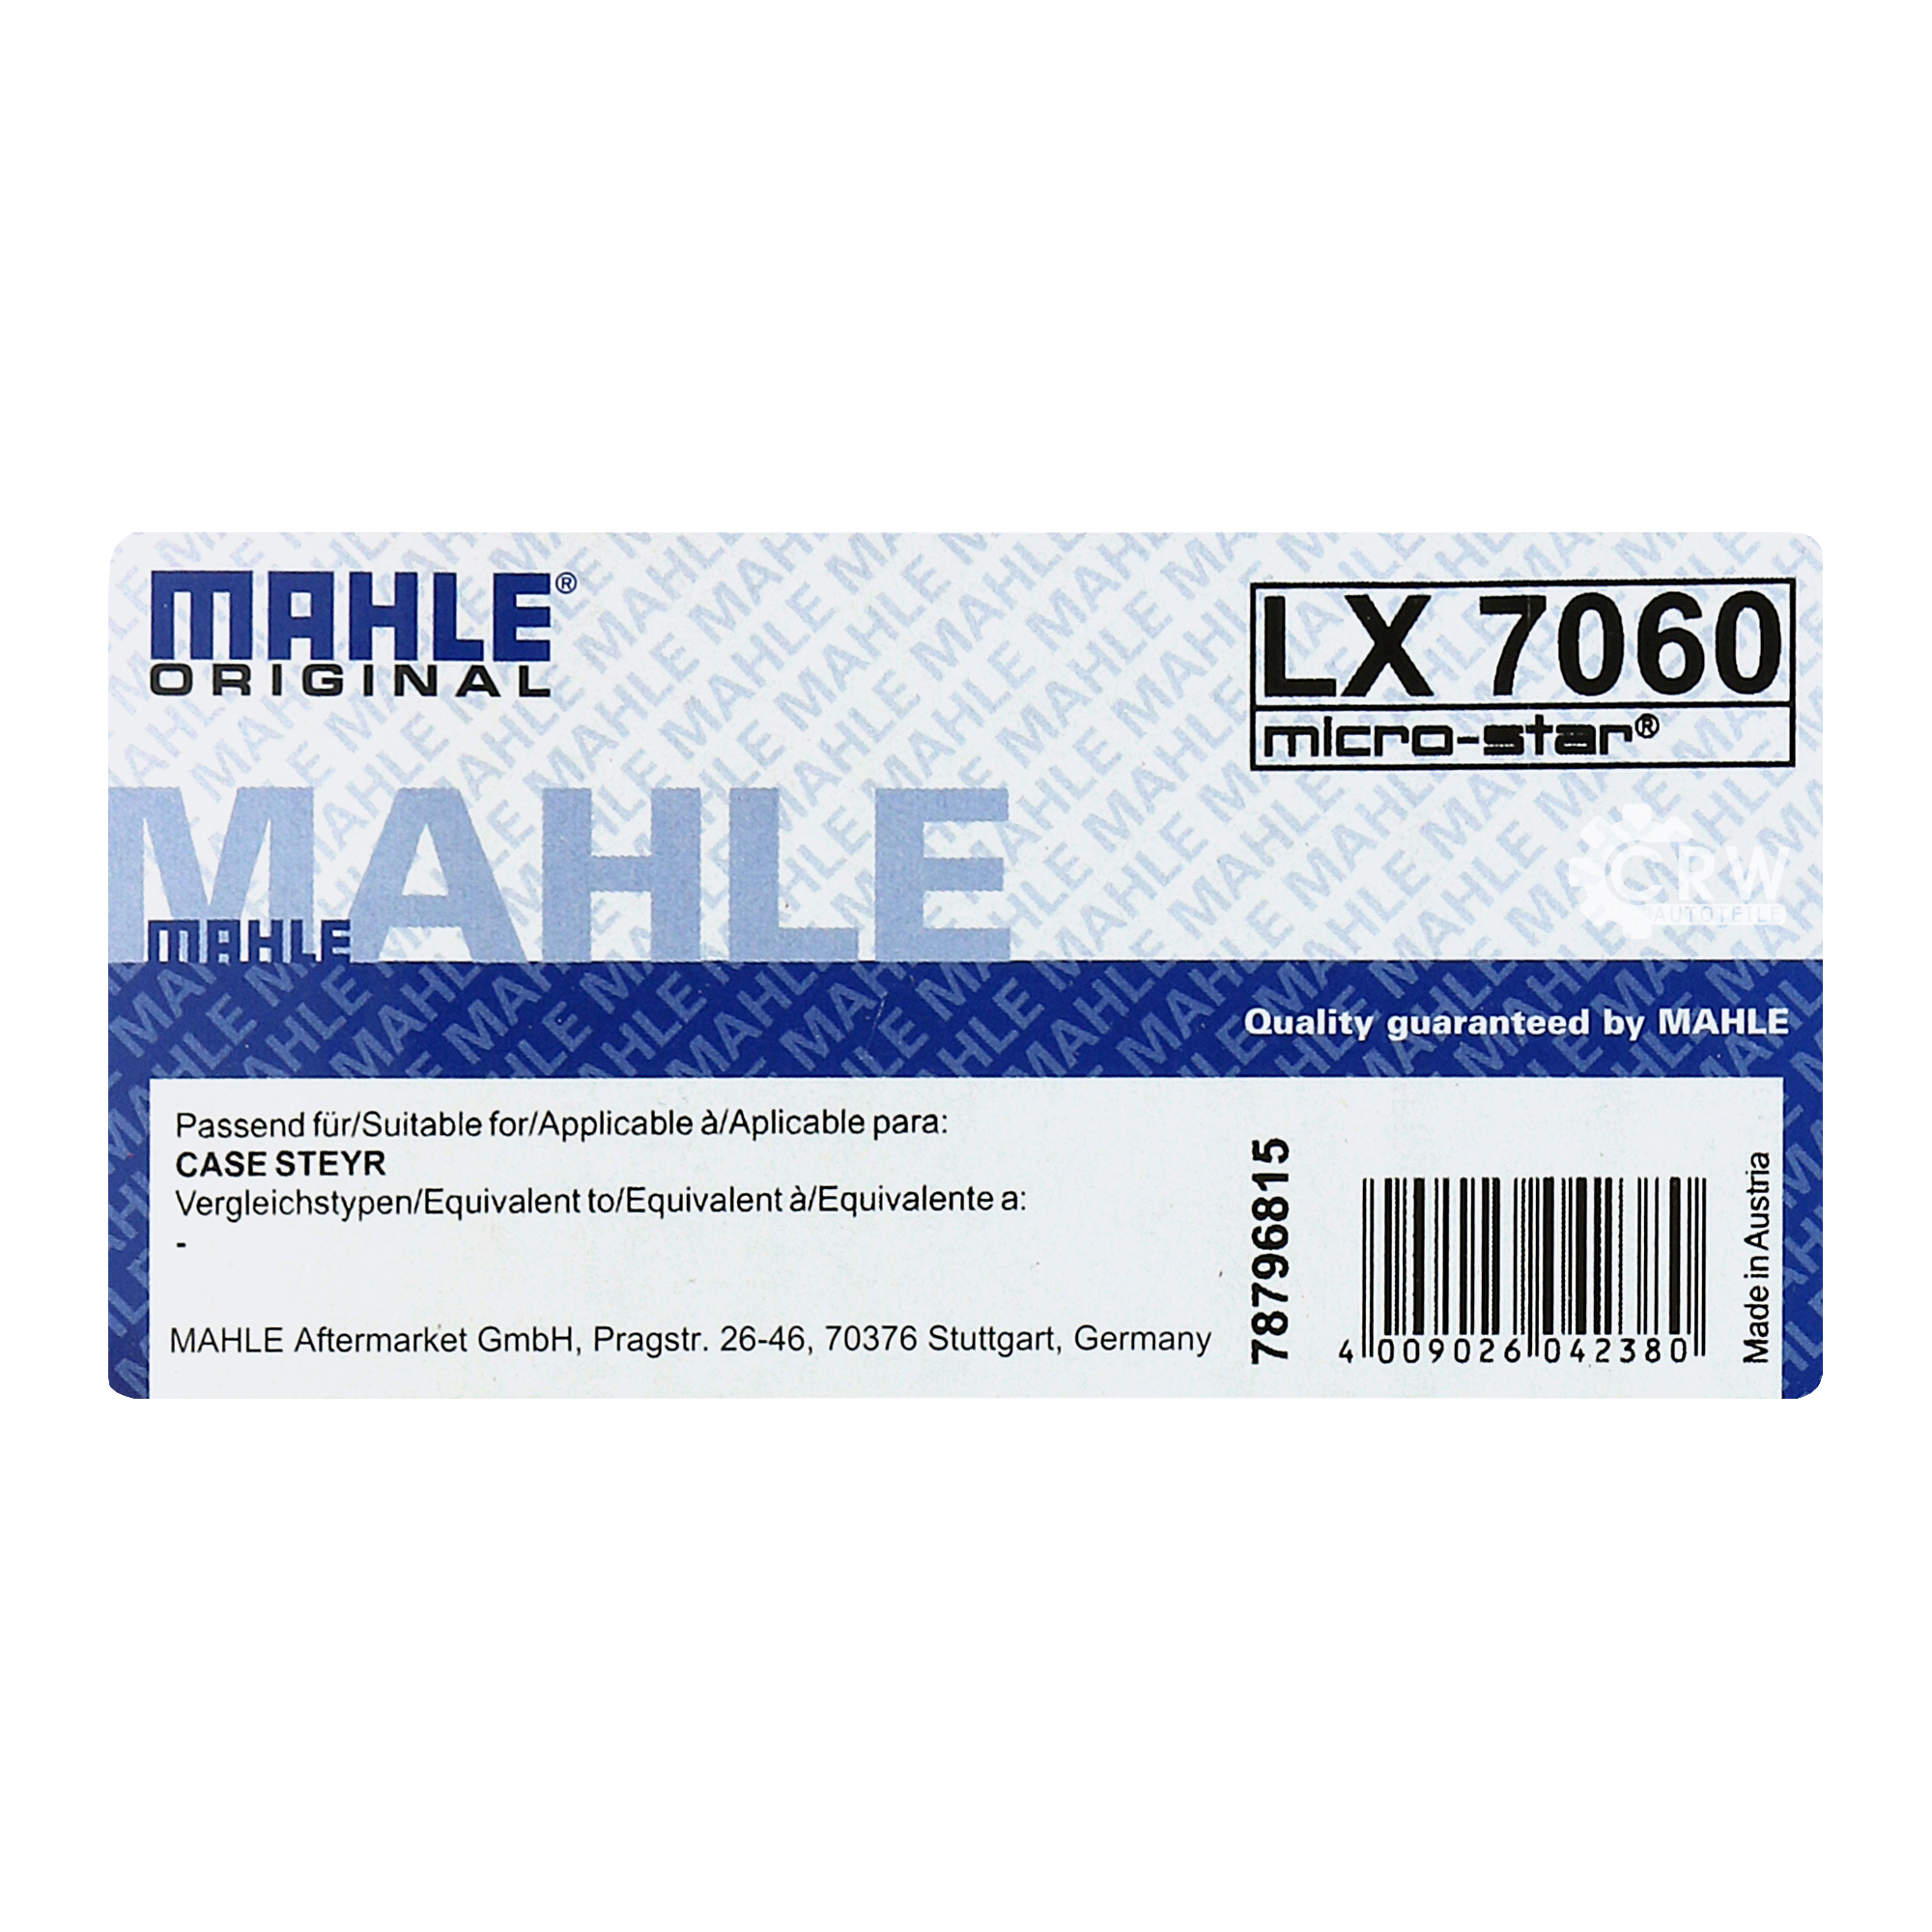 MAHLE Luftfilter LX 7060